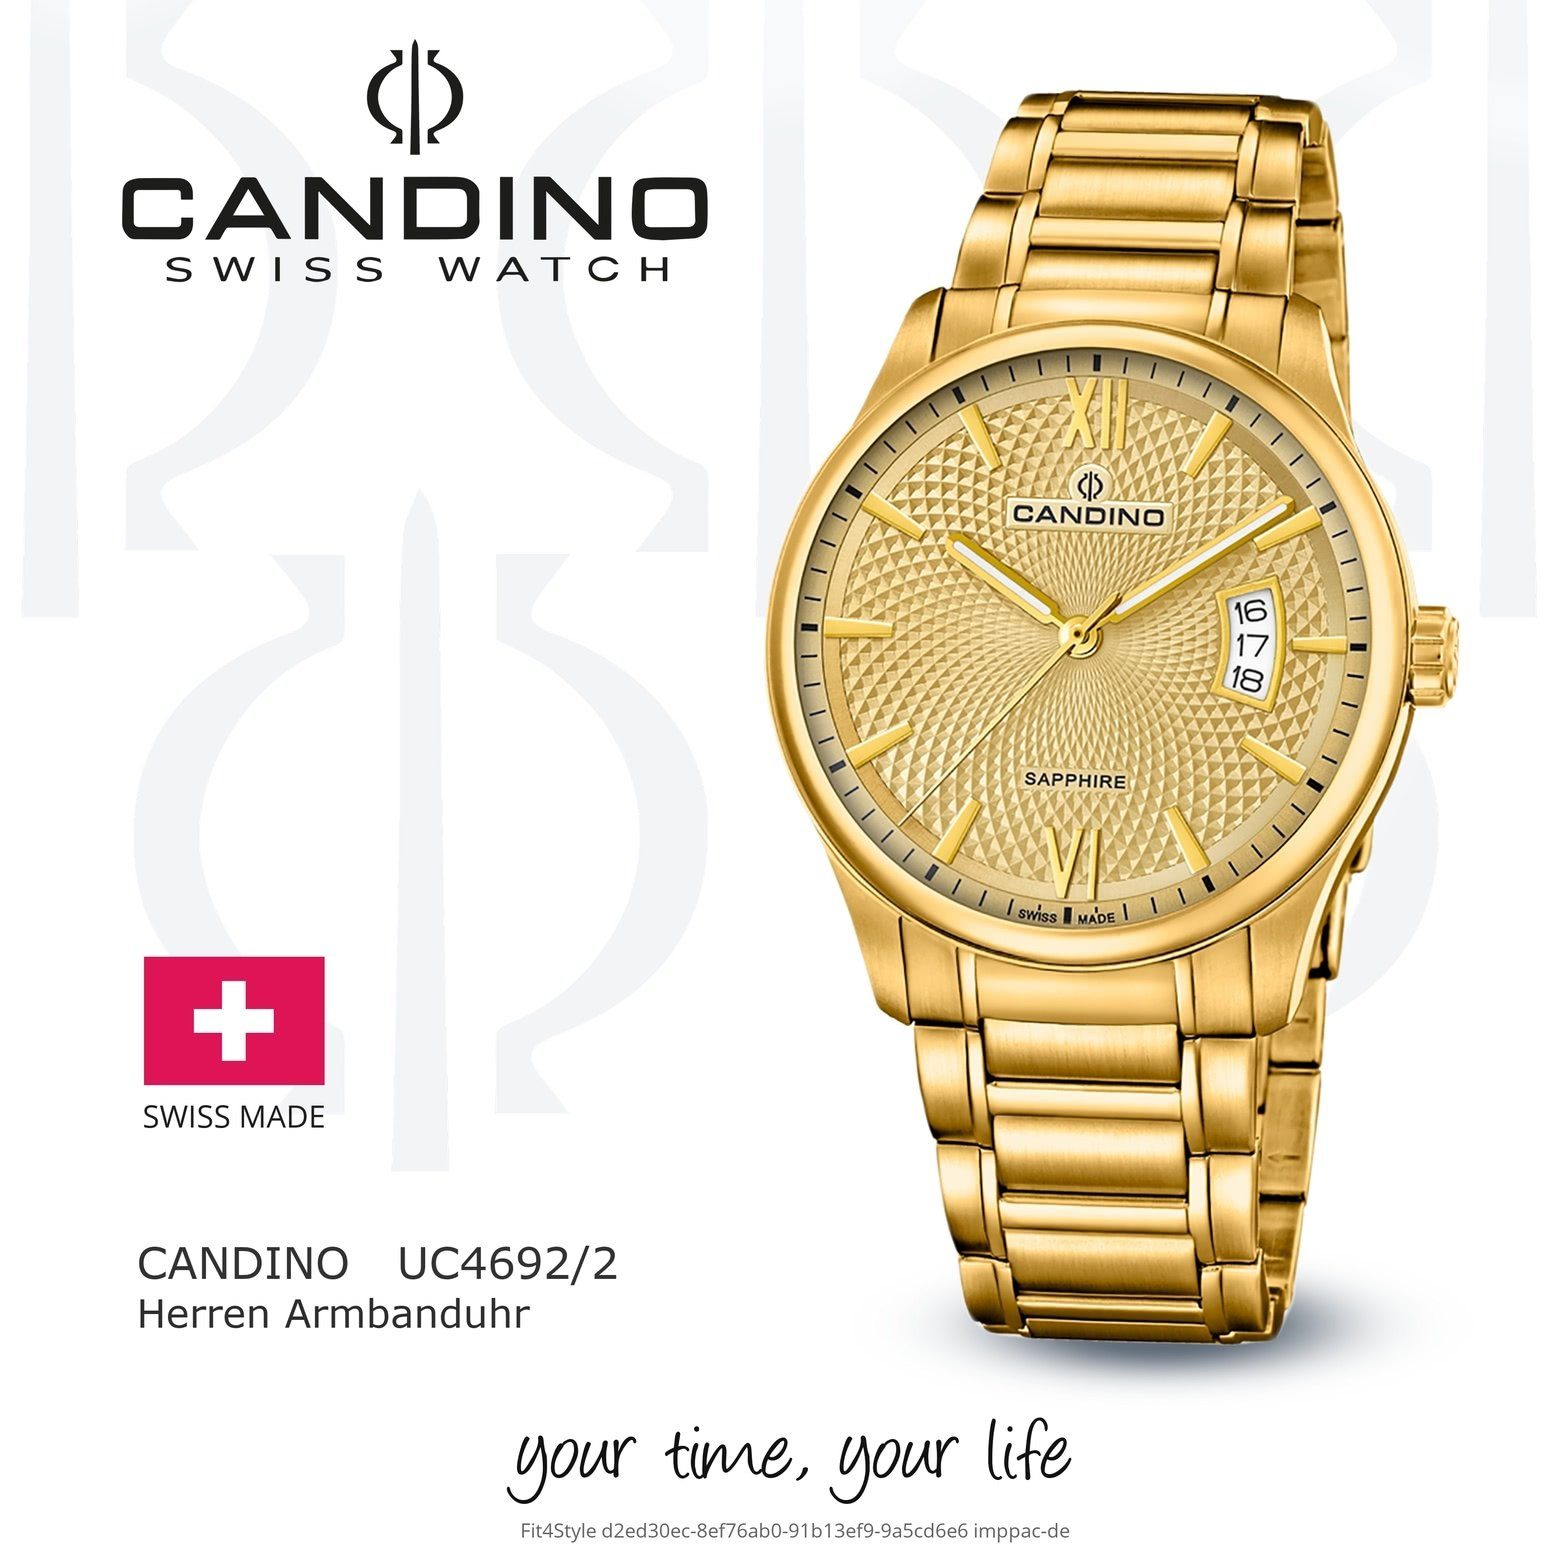 Quarzuhr Uhr Edelstahlarmband Candino Analog Herren rund, Armbanduhr gold, Herren C4692/2, Candino Elegant